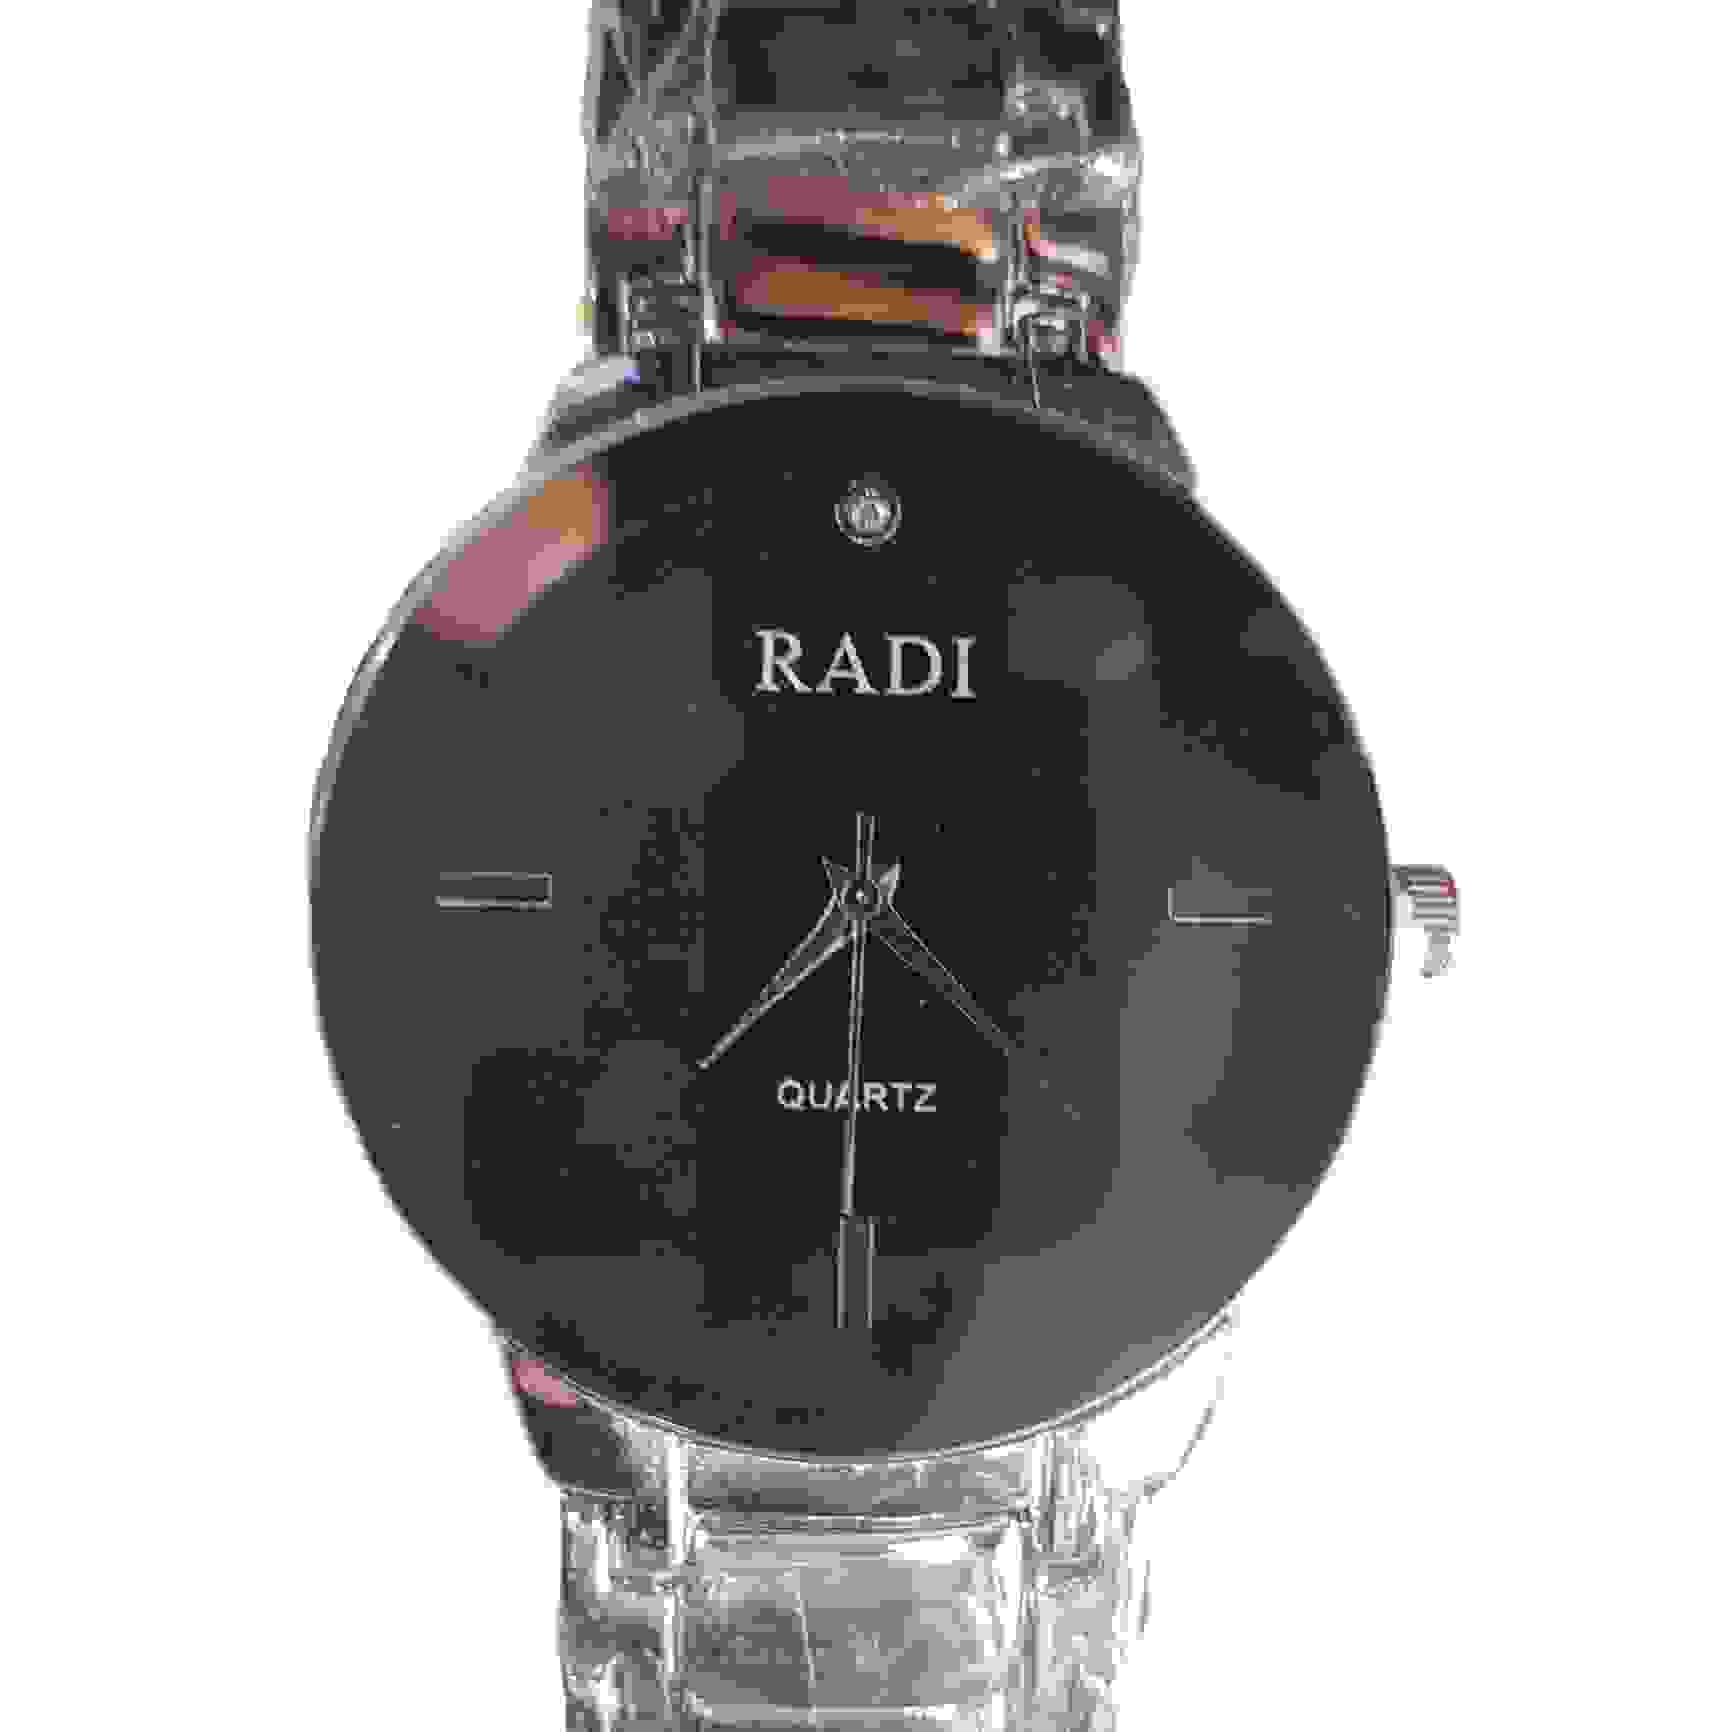 Radi quartz watch for men and women